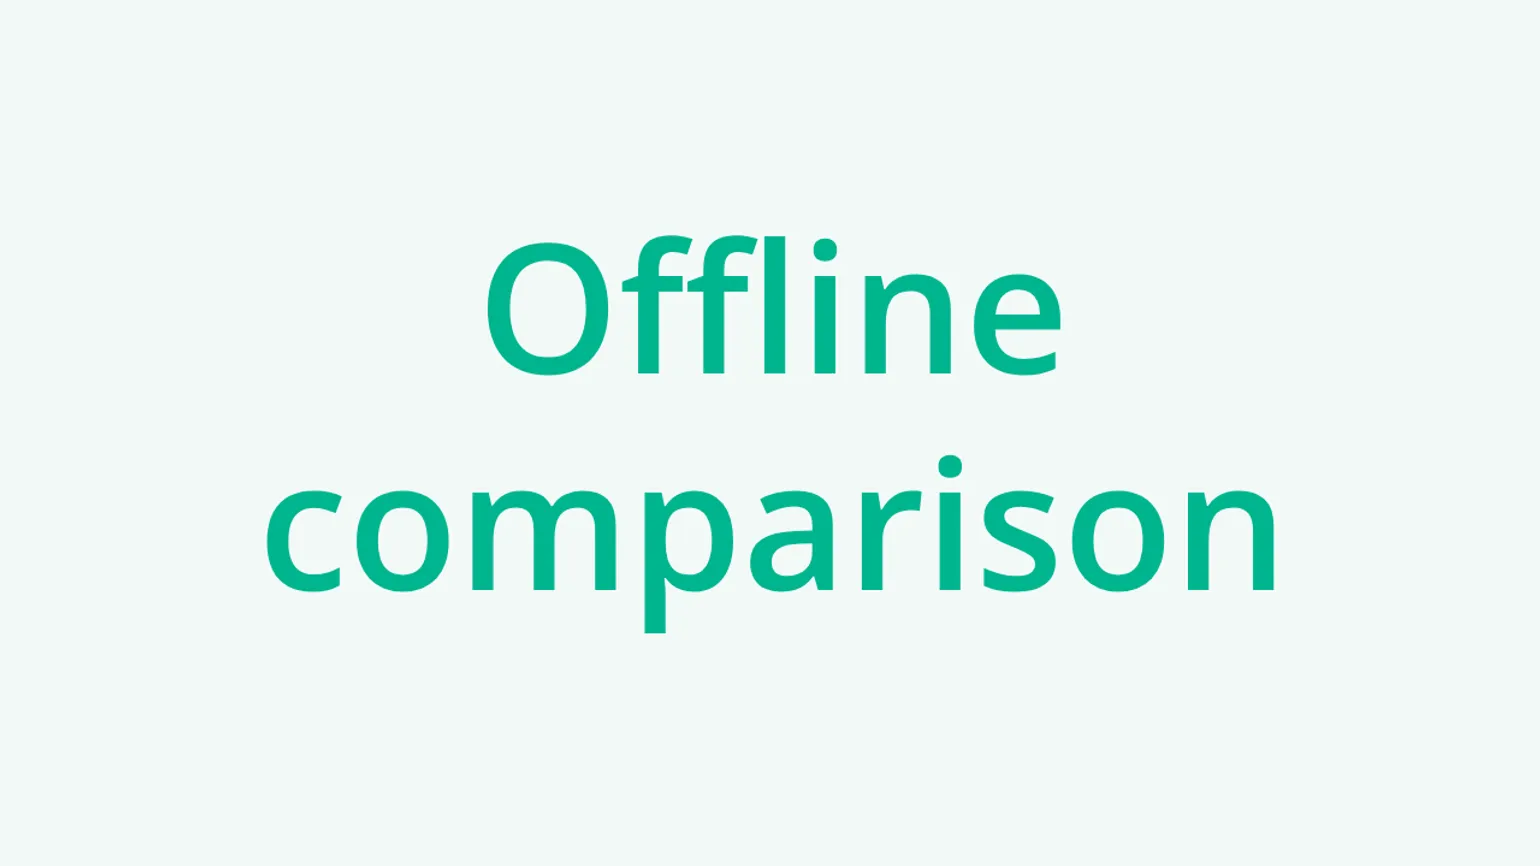 Offline comparison